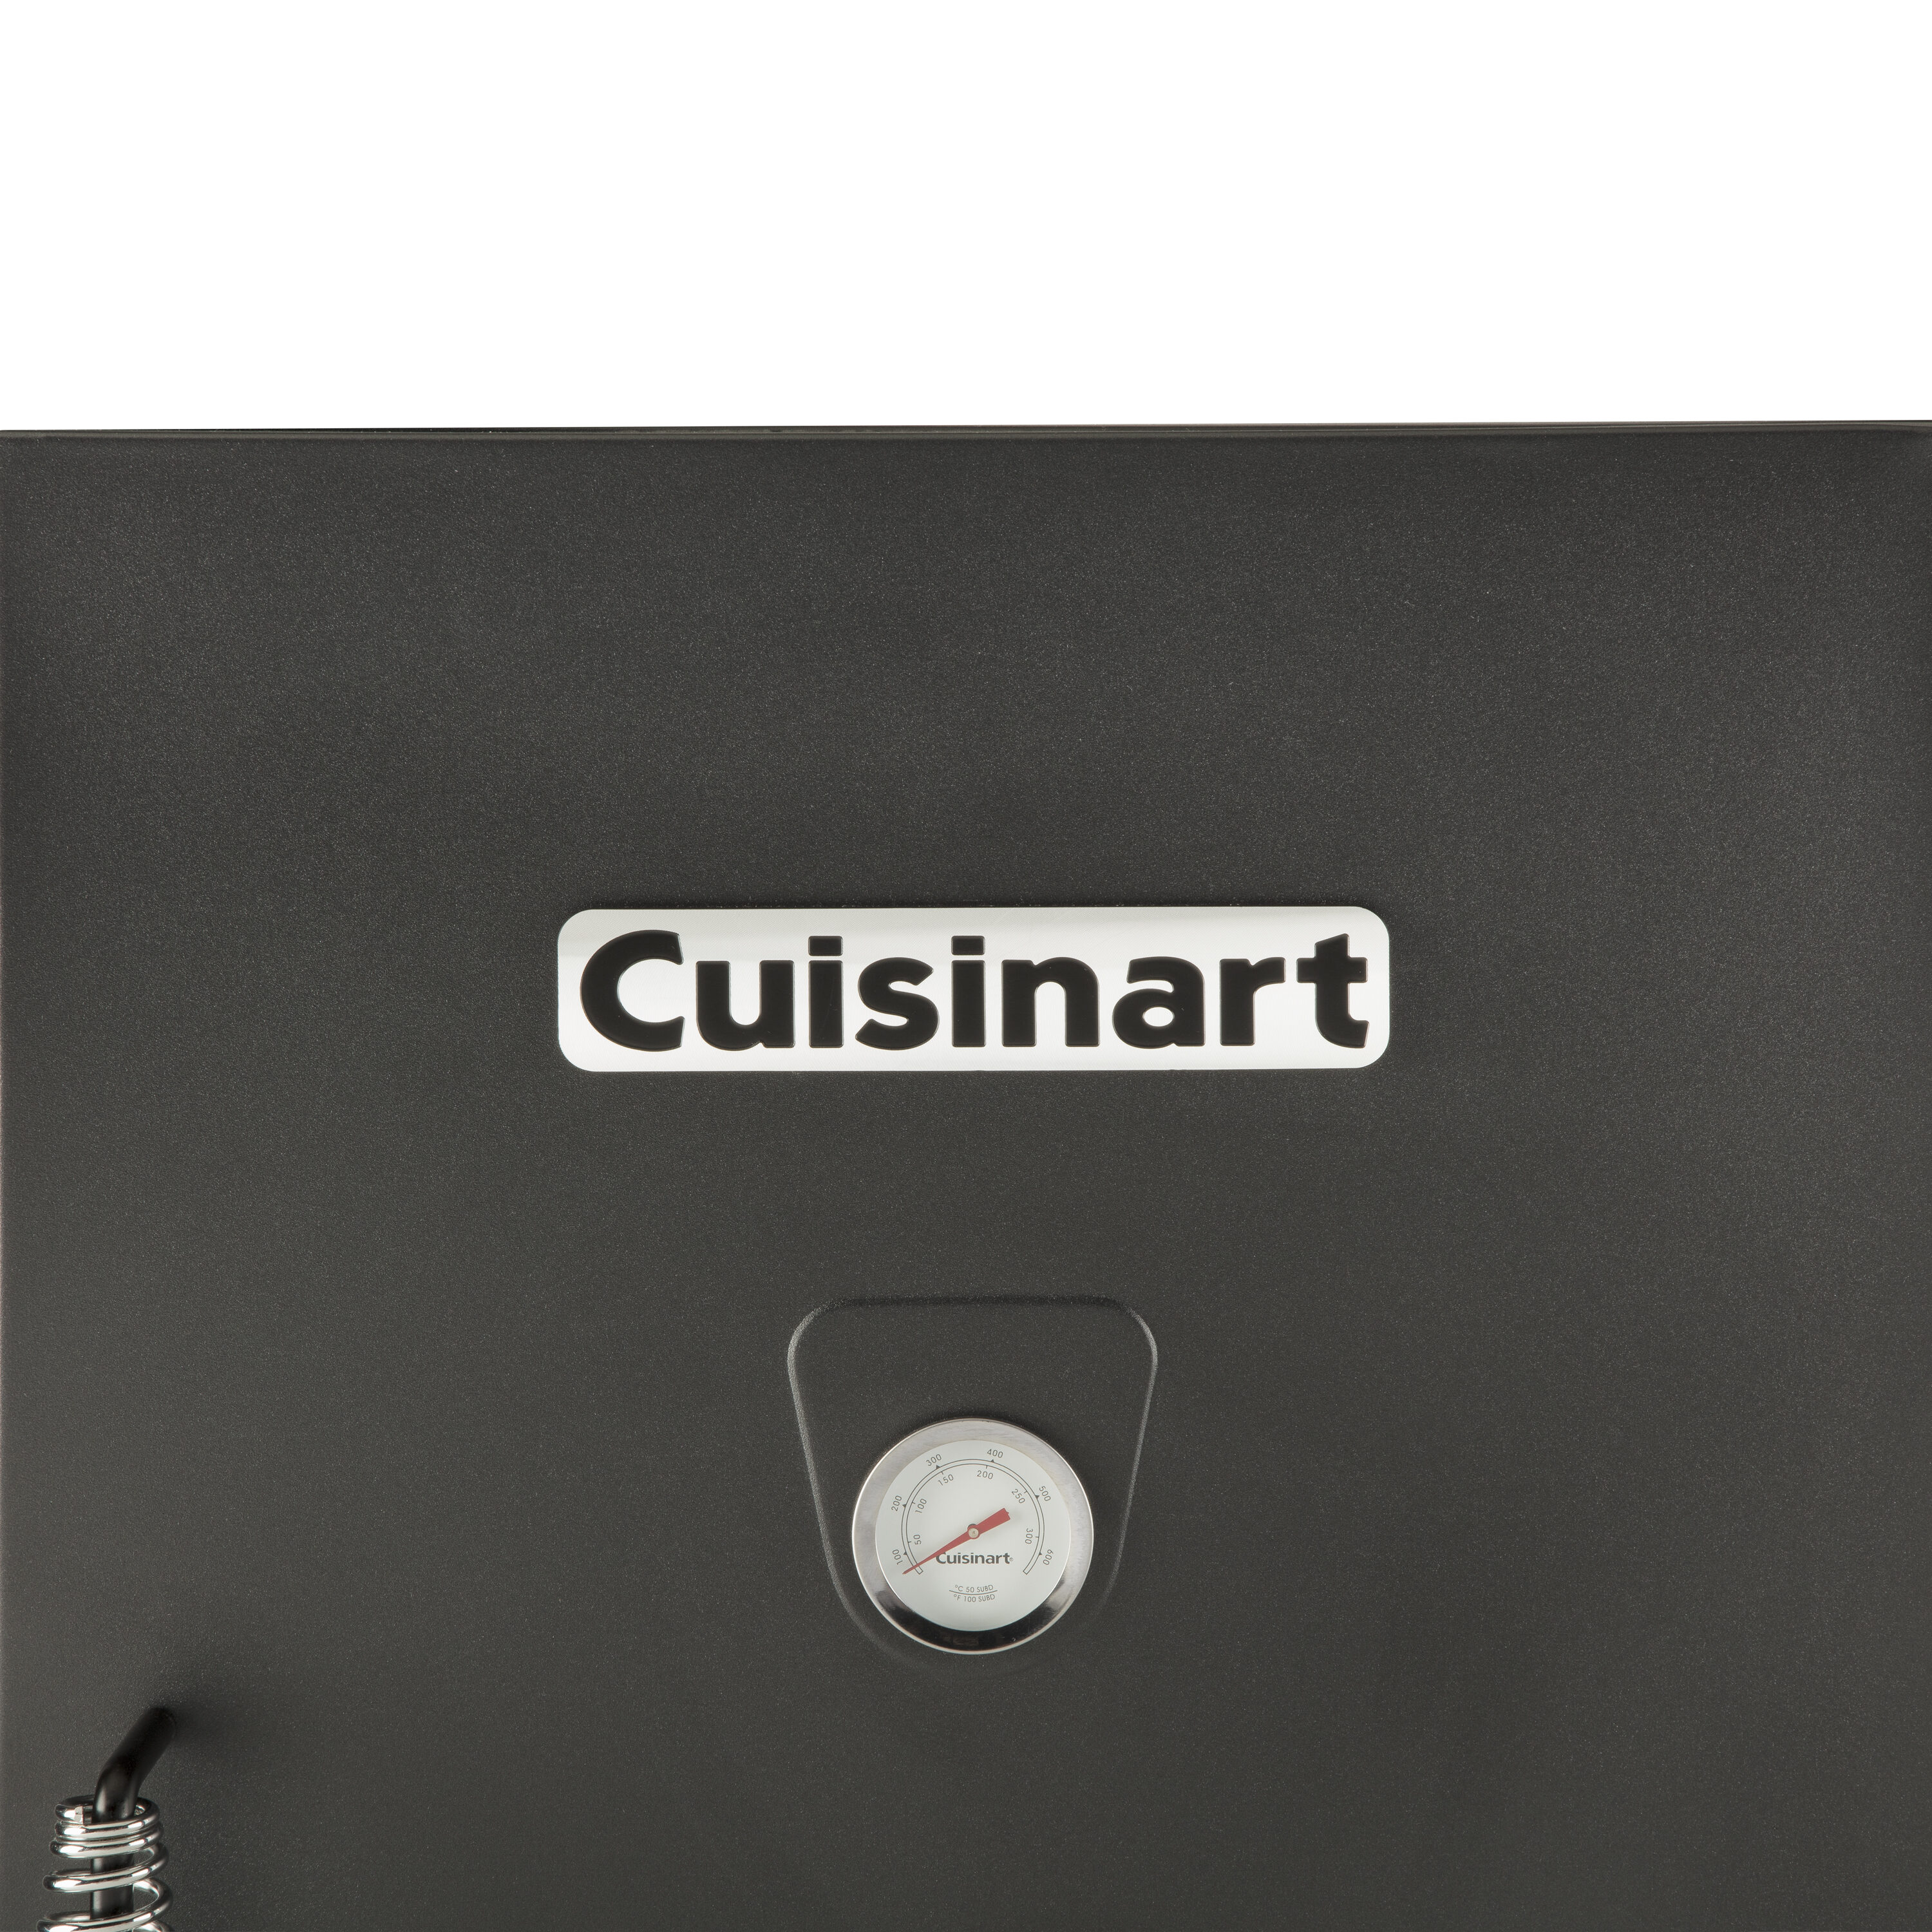 Cuisinart Electric Smoker 1500W, 3 Cooking Racks, Digital Temp